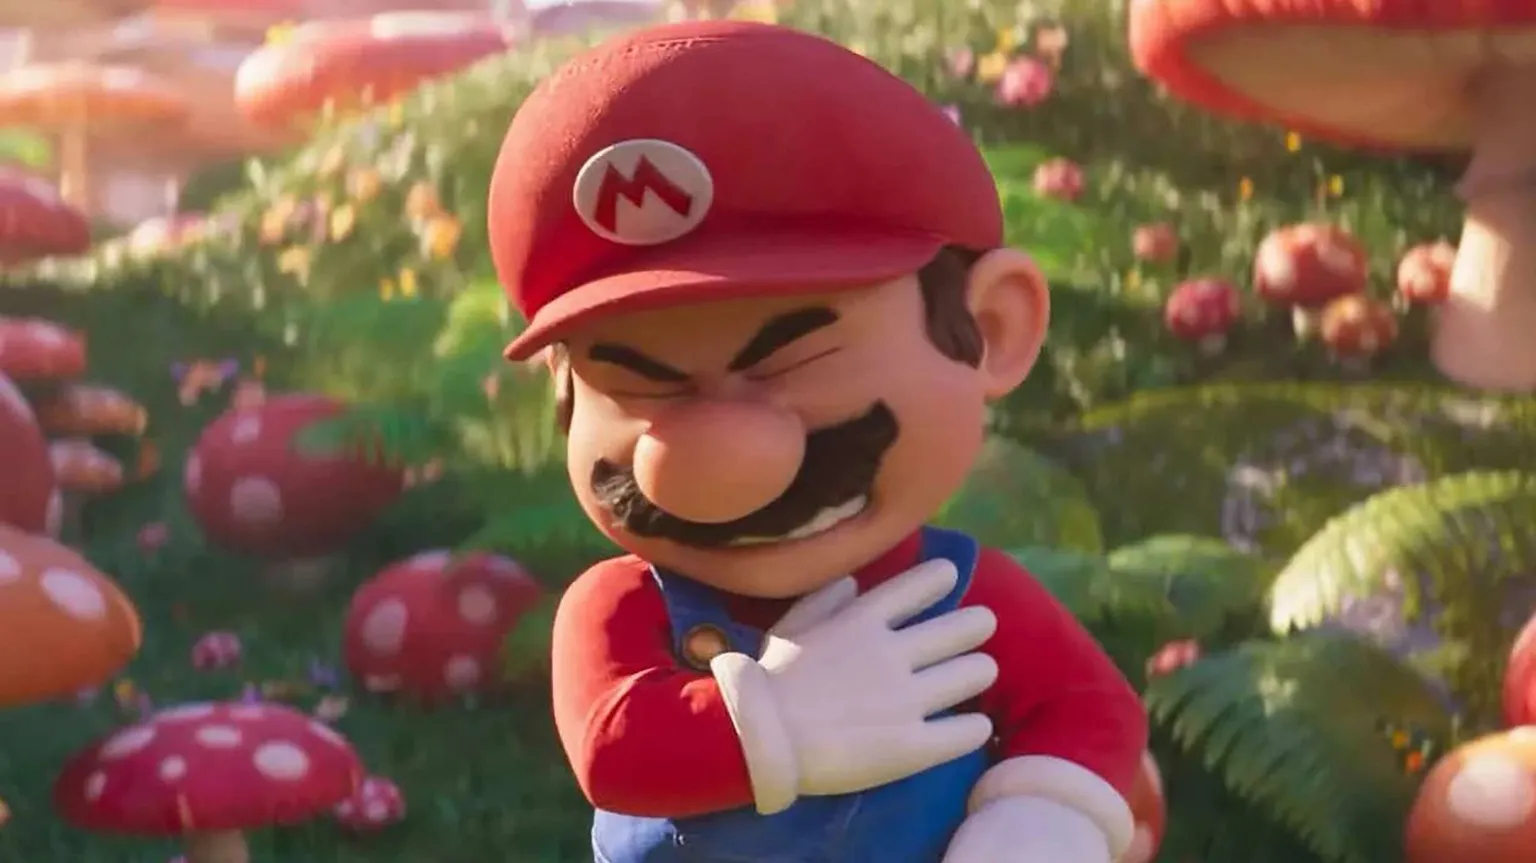 A still image from 'The Super Mario Bros. Movie.' Image: Universal/Illumination